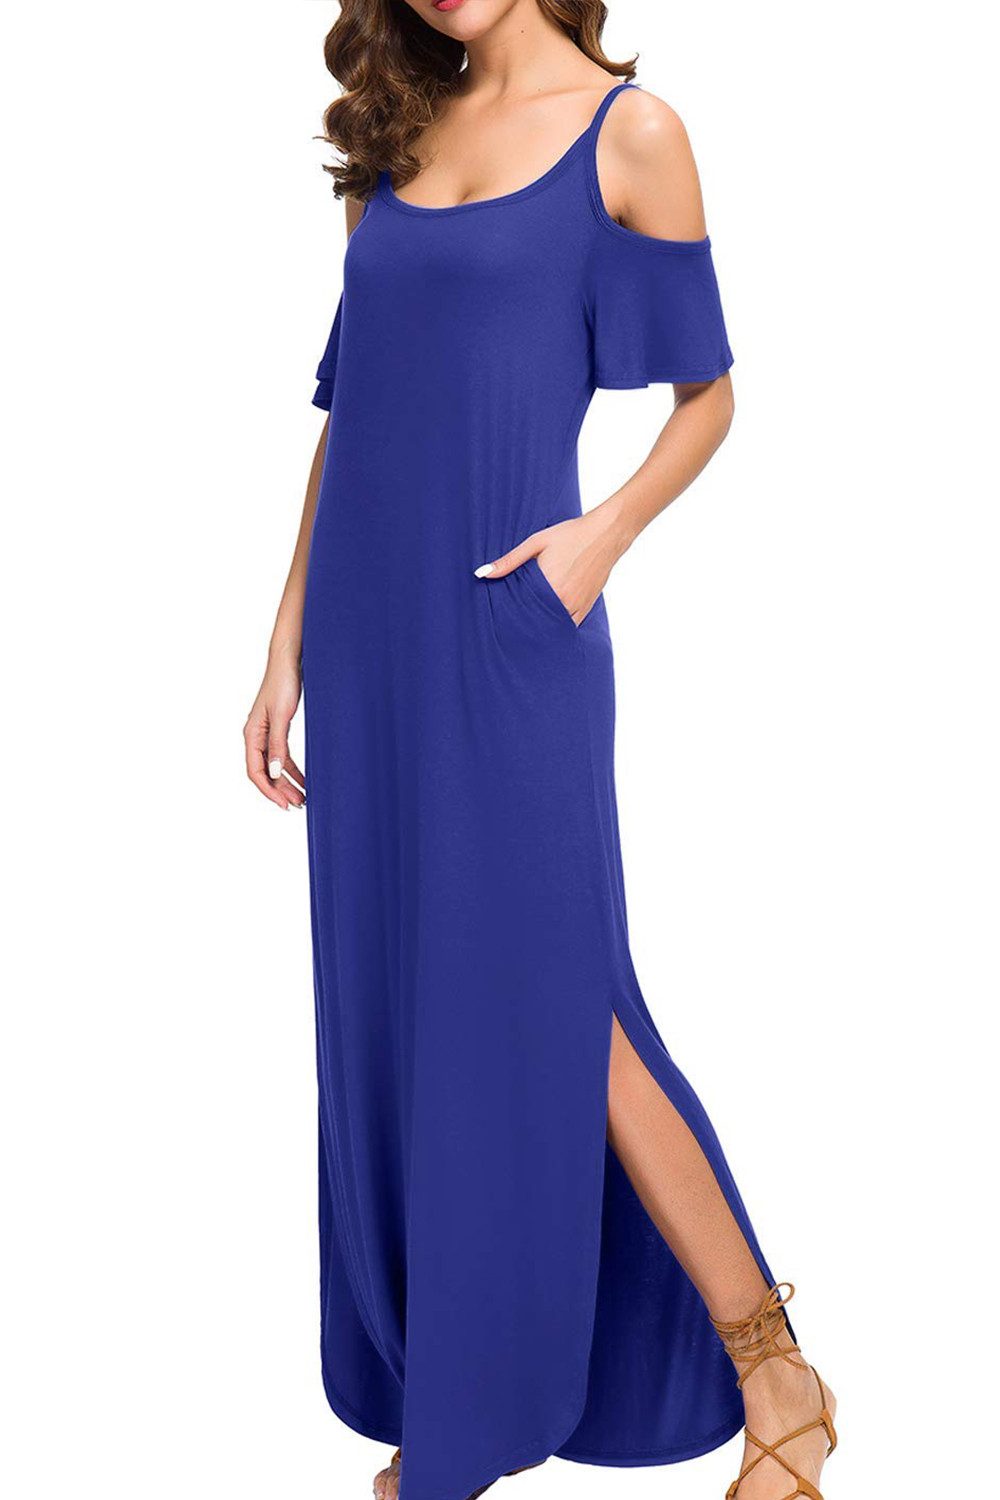 Orient Phoenix Off-Shoulder-Kleid Off-Shoulder-Kleid Kurzärmliges langes mit VAusschnitt ELASTIC DRESS Frühlingsfarbenes, langes, geschlitztes Strapskleid